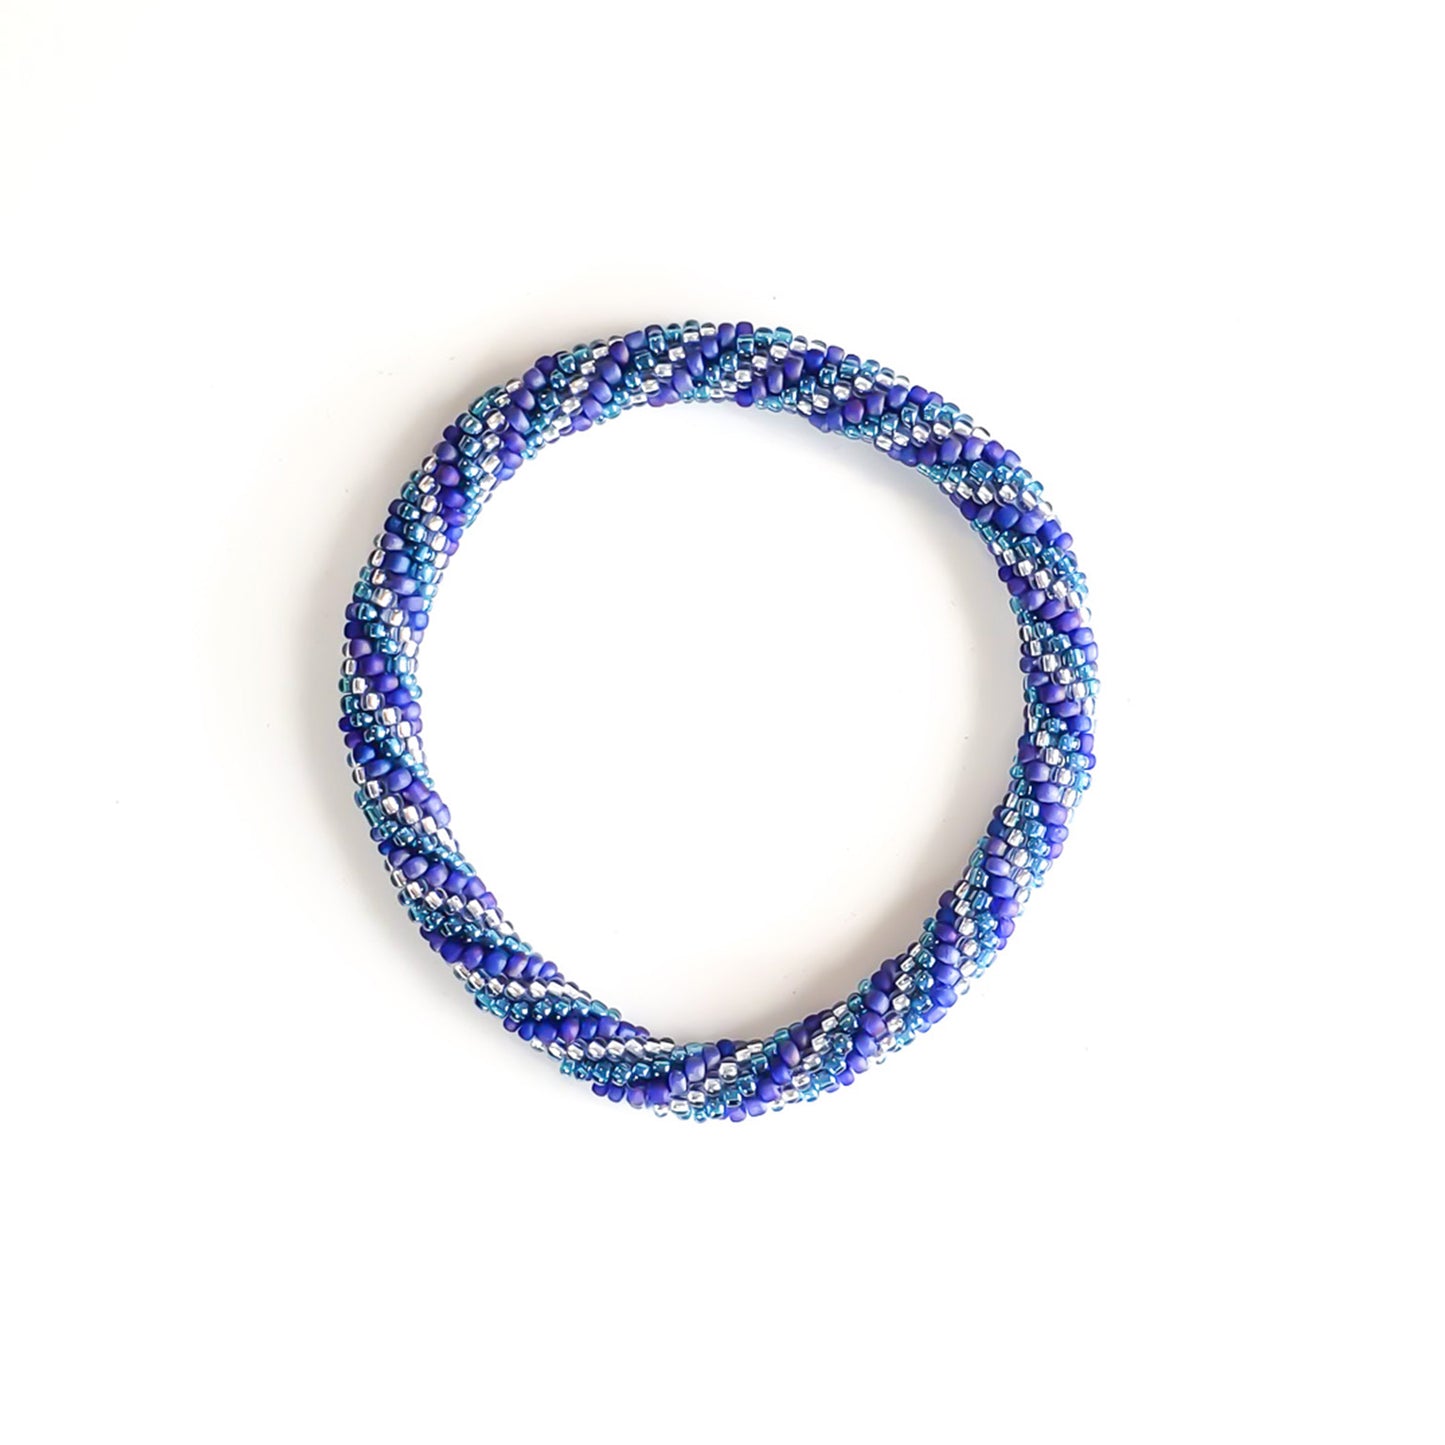 Roll-On Bracelet - Agave (Purple, Teal & Turquoise)